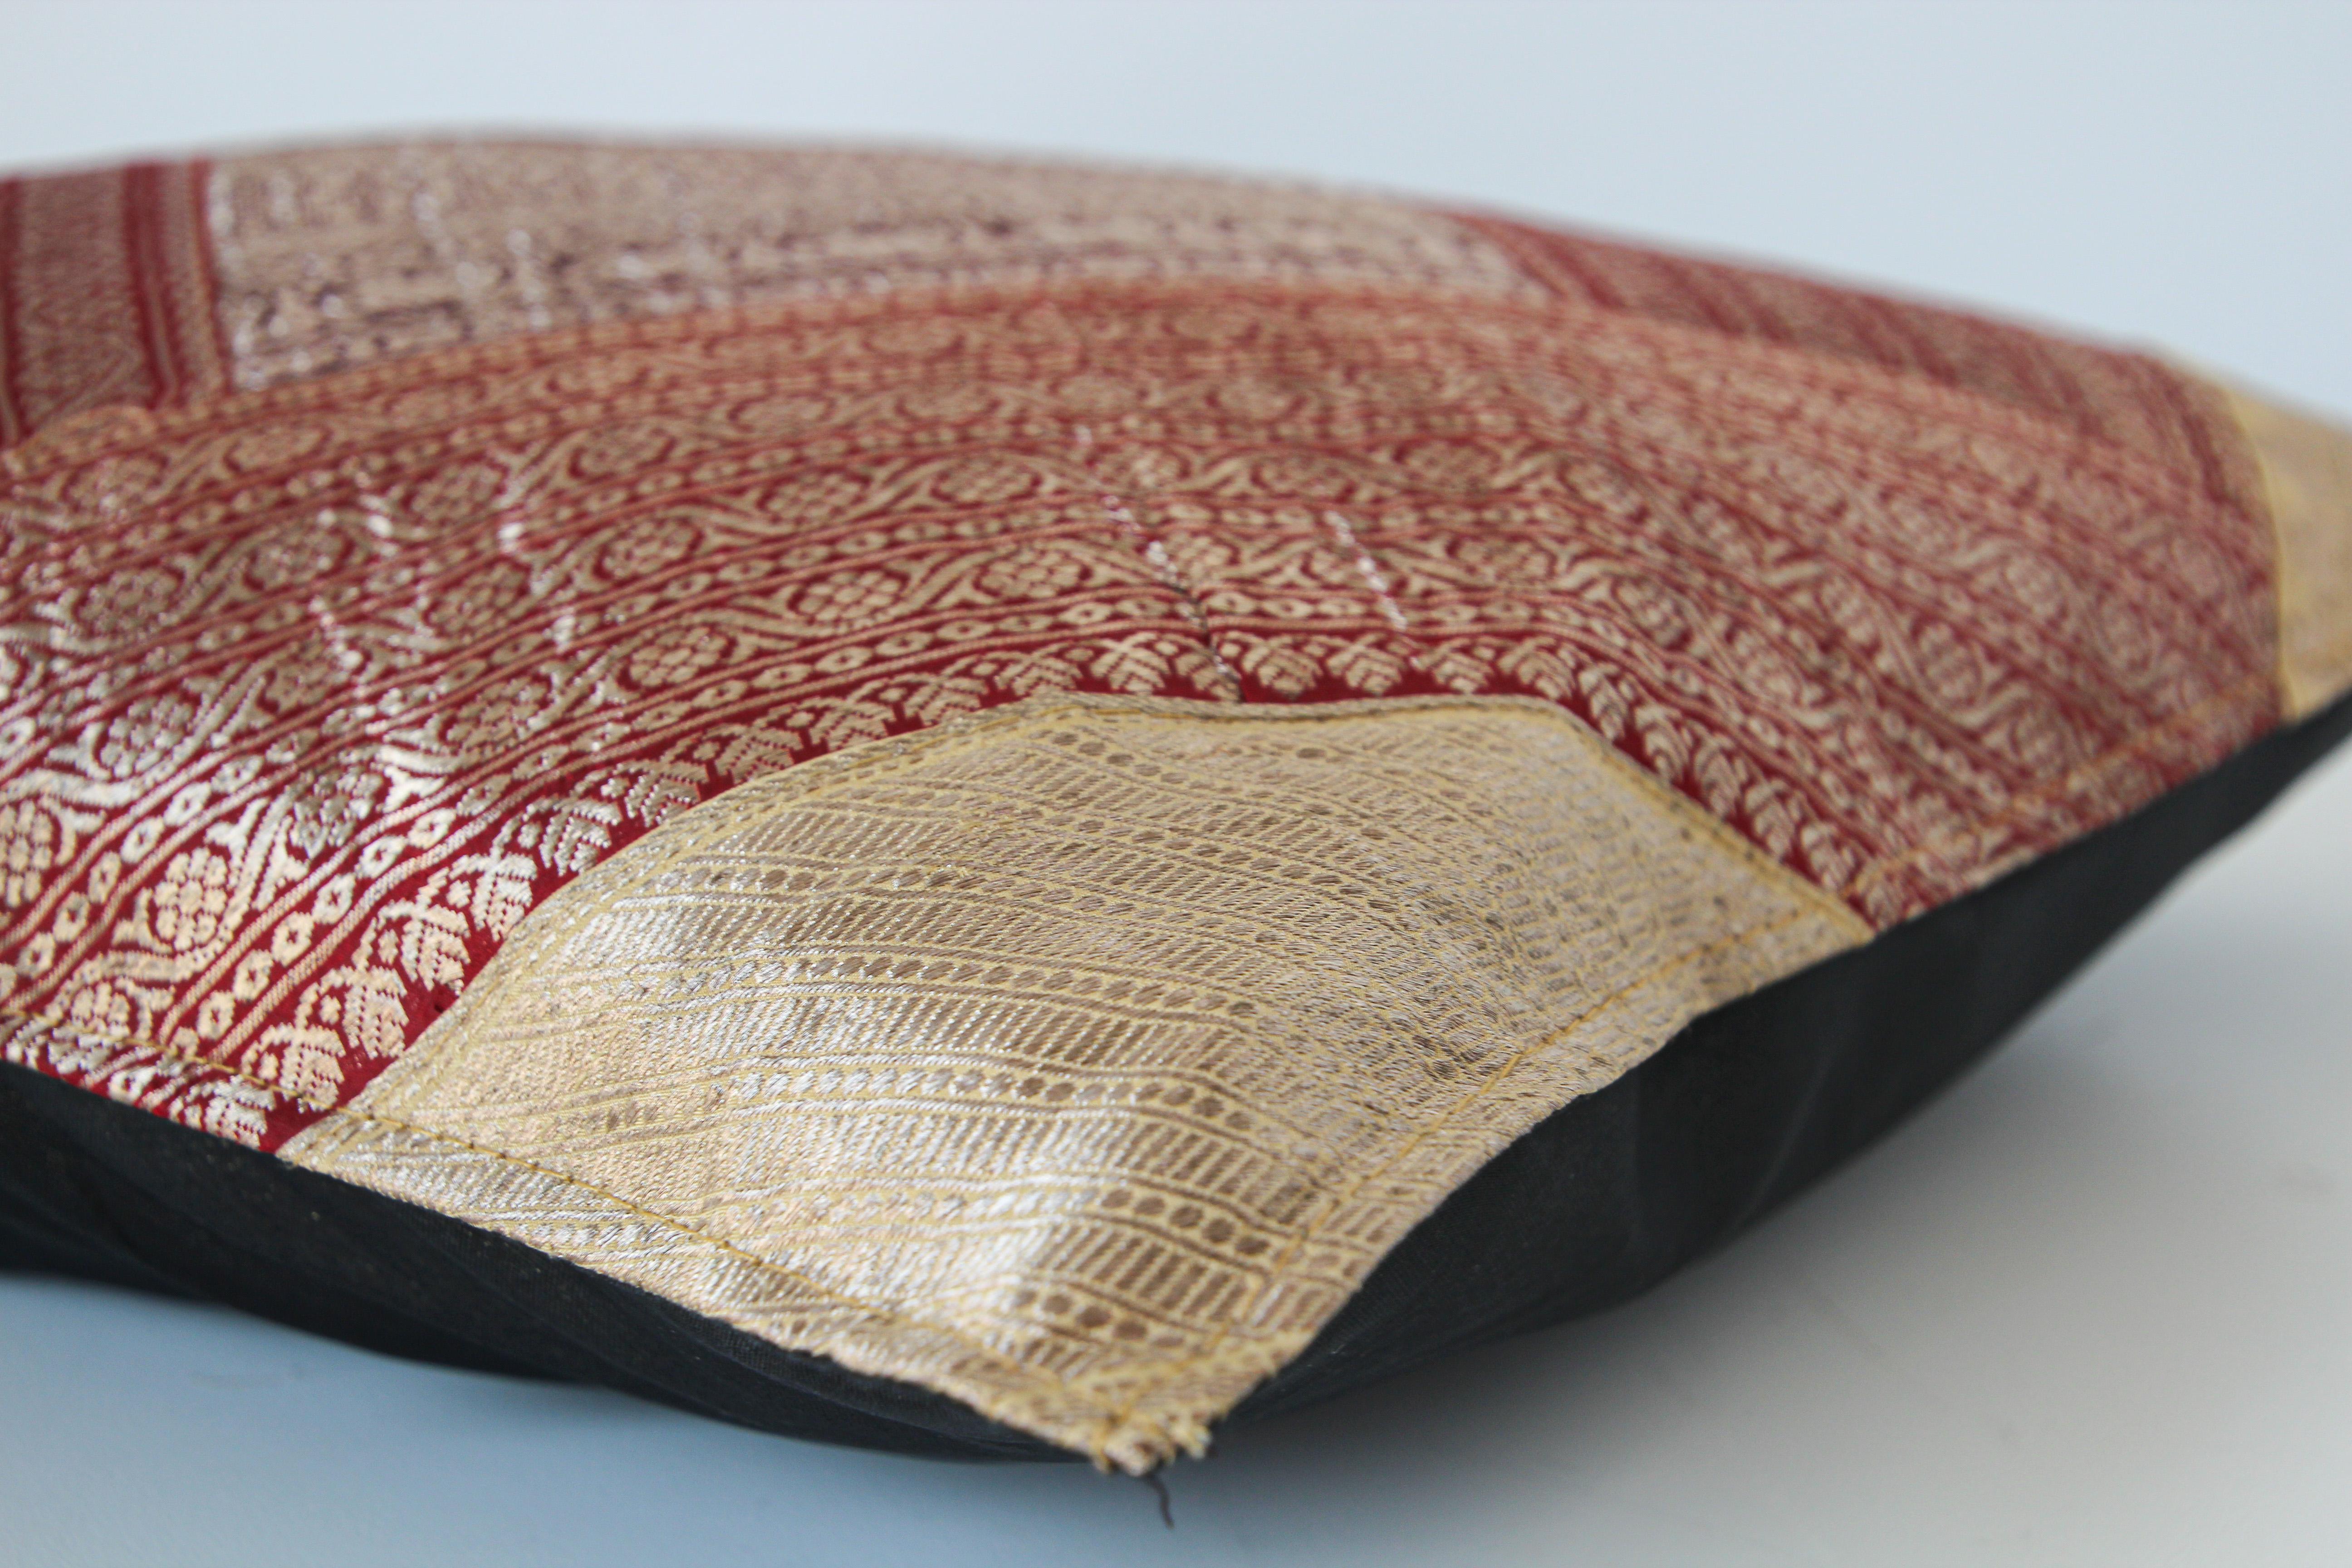 Decorative Silk Throw Pillow Made from Vintage Sari Borders, India 2